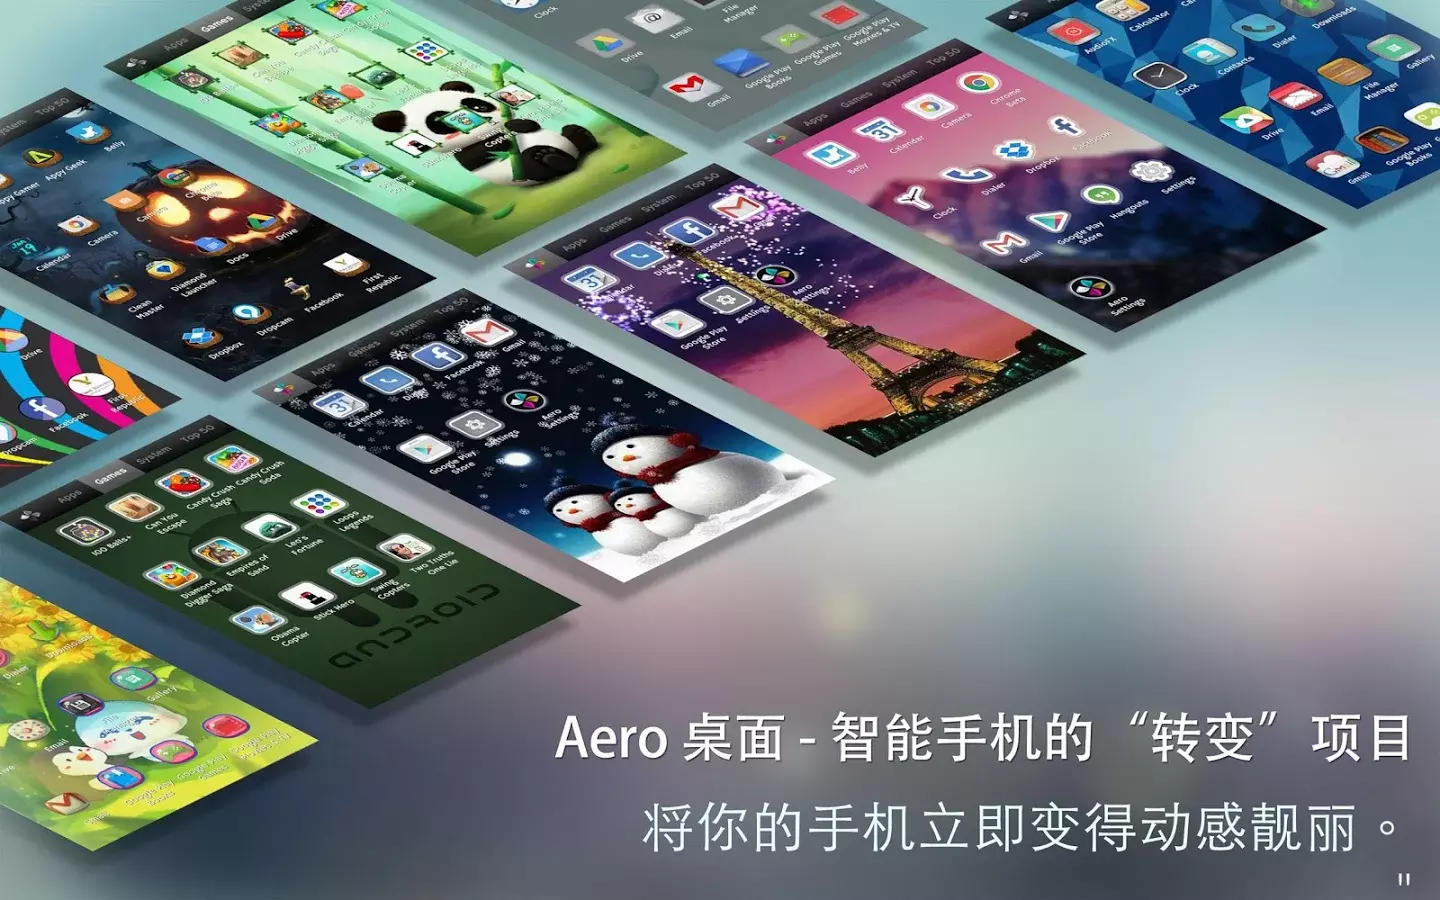 Aero 桌面 - 智能手机的“转变”项目截图5